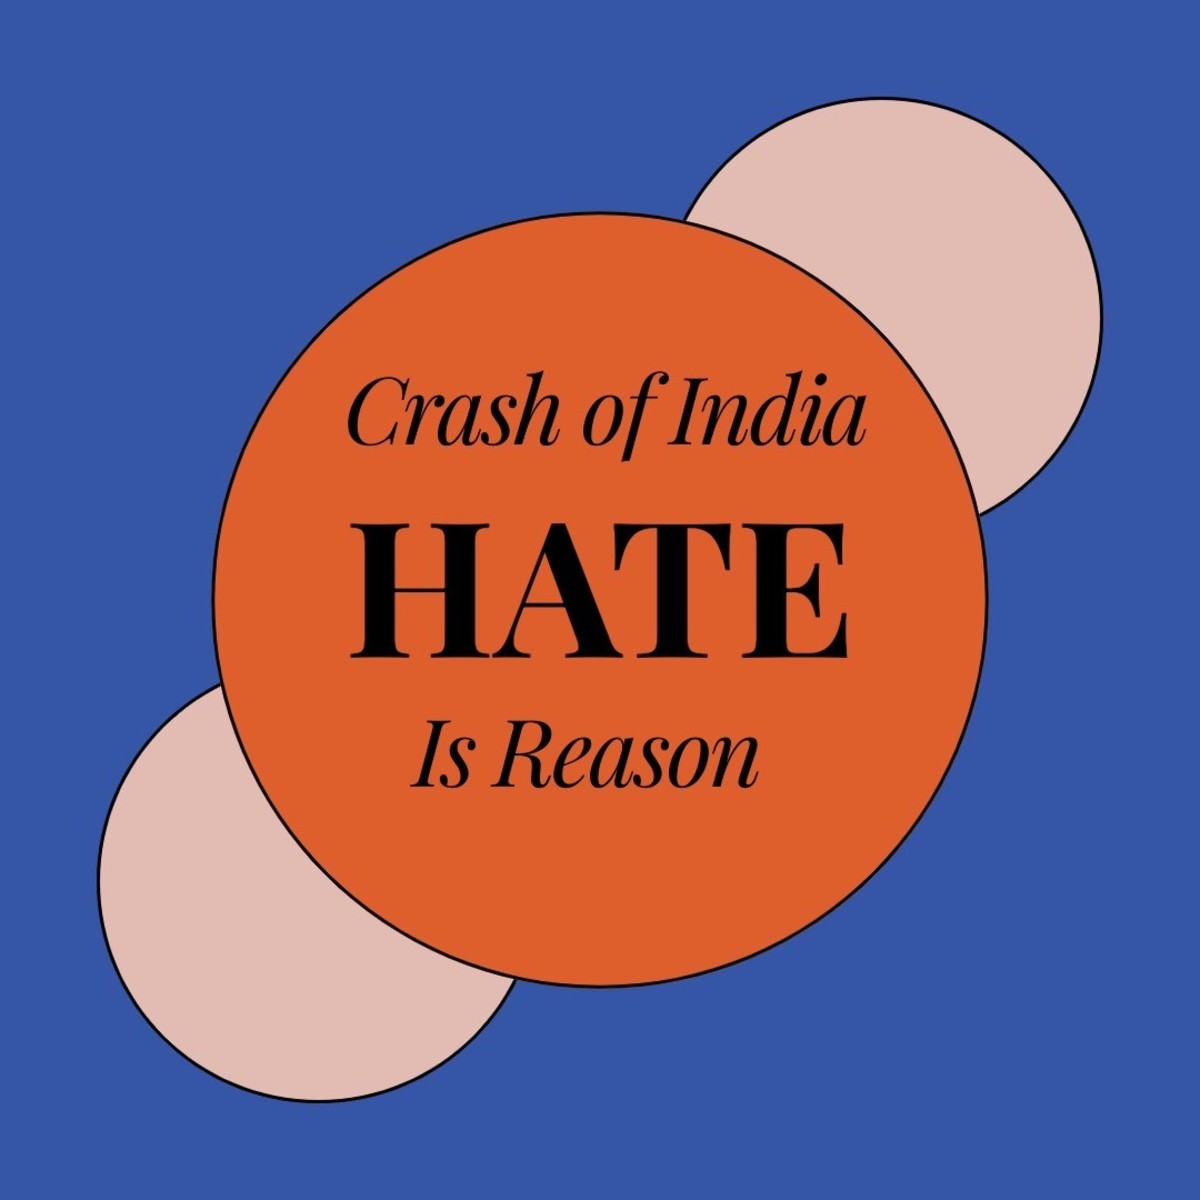 Hate will Bring Crash 